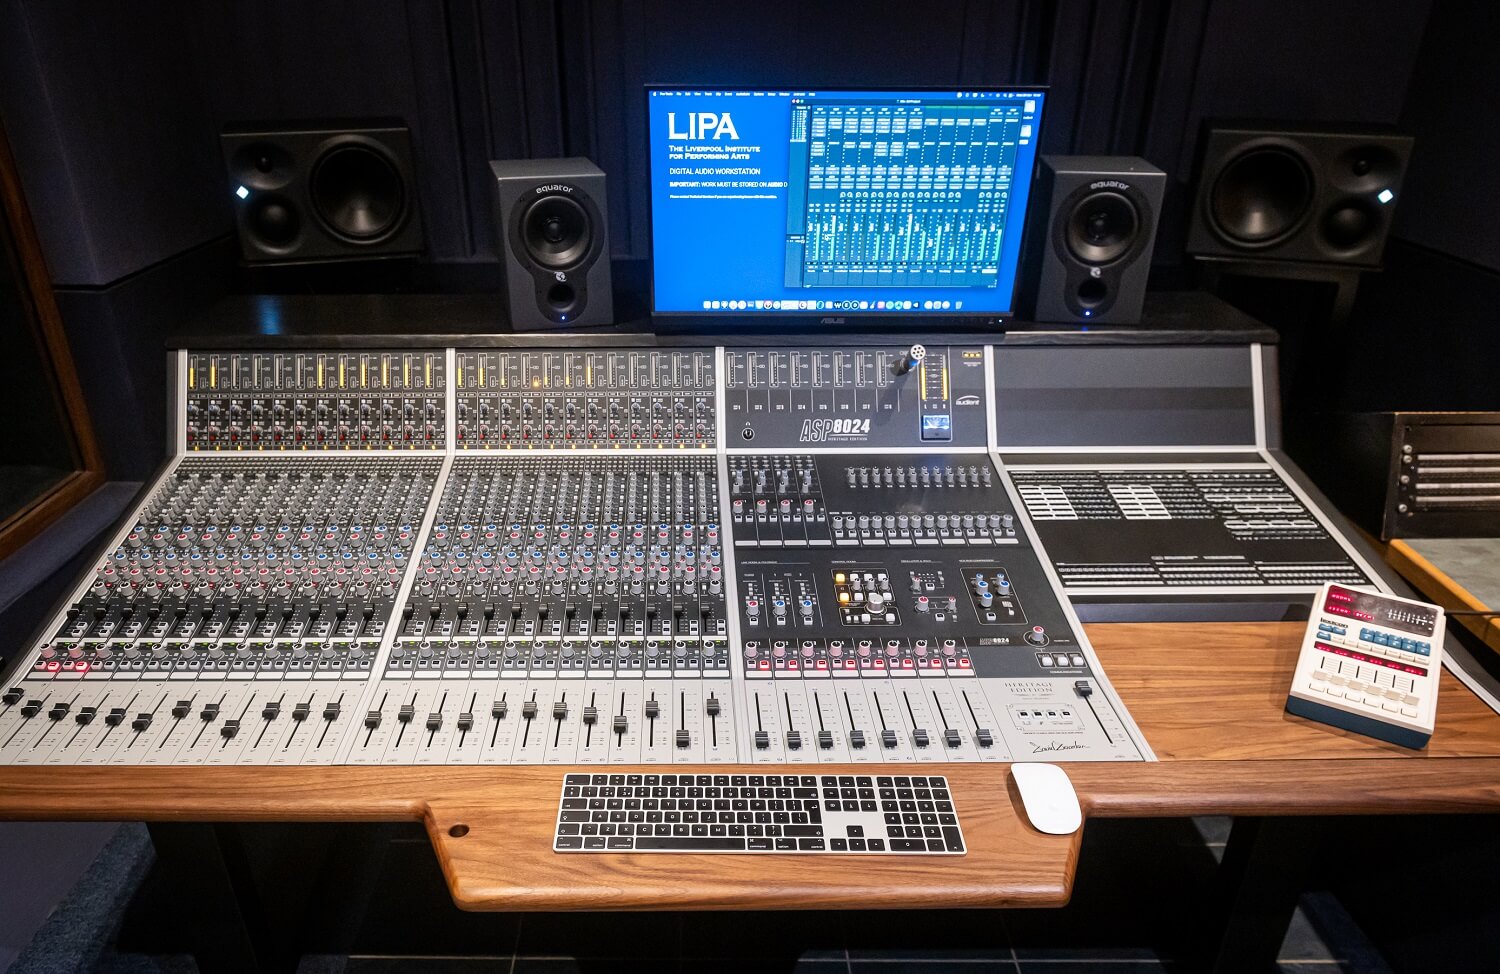 Sleek audio mixing console with keyboard and monitor at LIPA educational facility